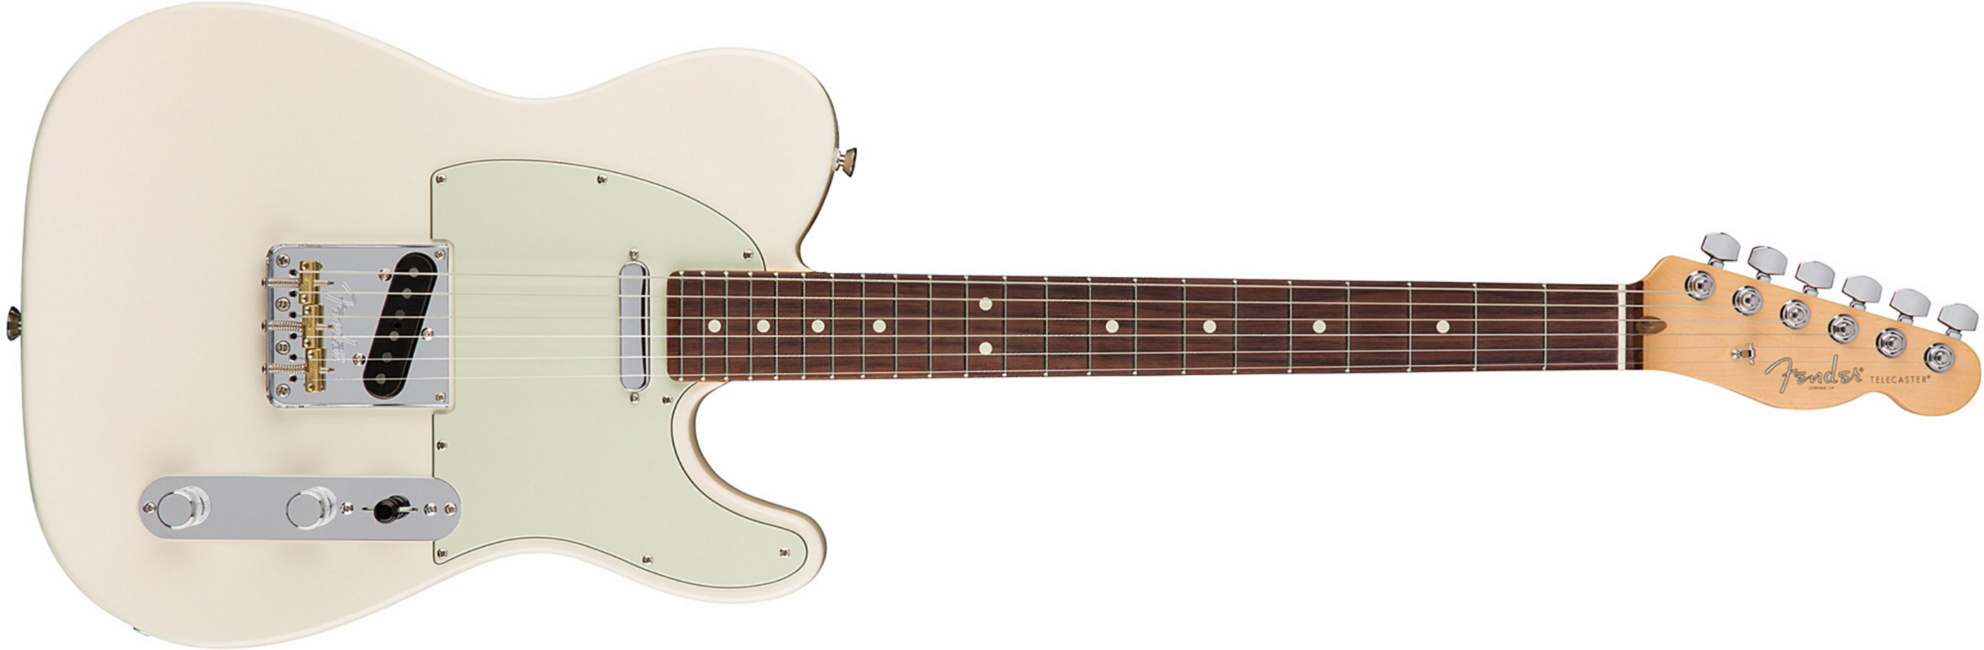 Fender Tele American Professional 2s Usa Rw - Olympic White - E-Gitarre in Teleform - Main picture